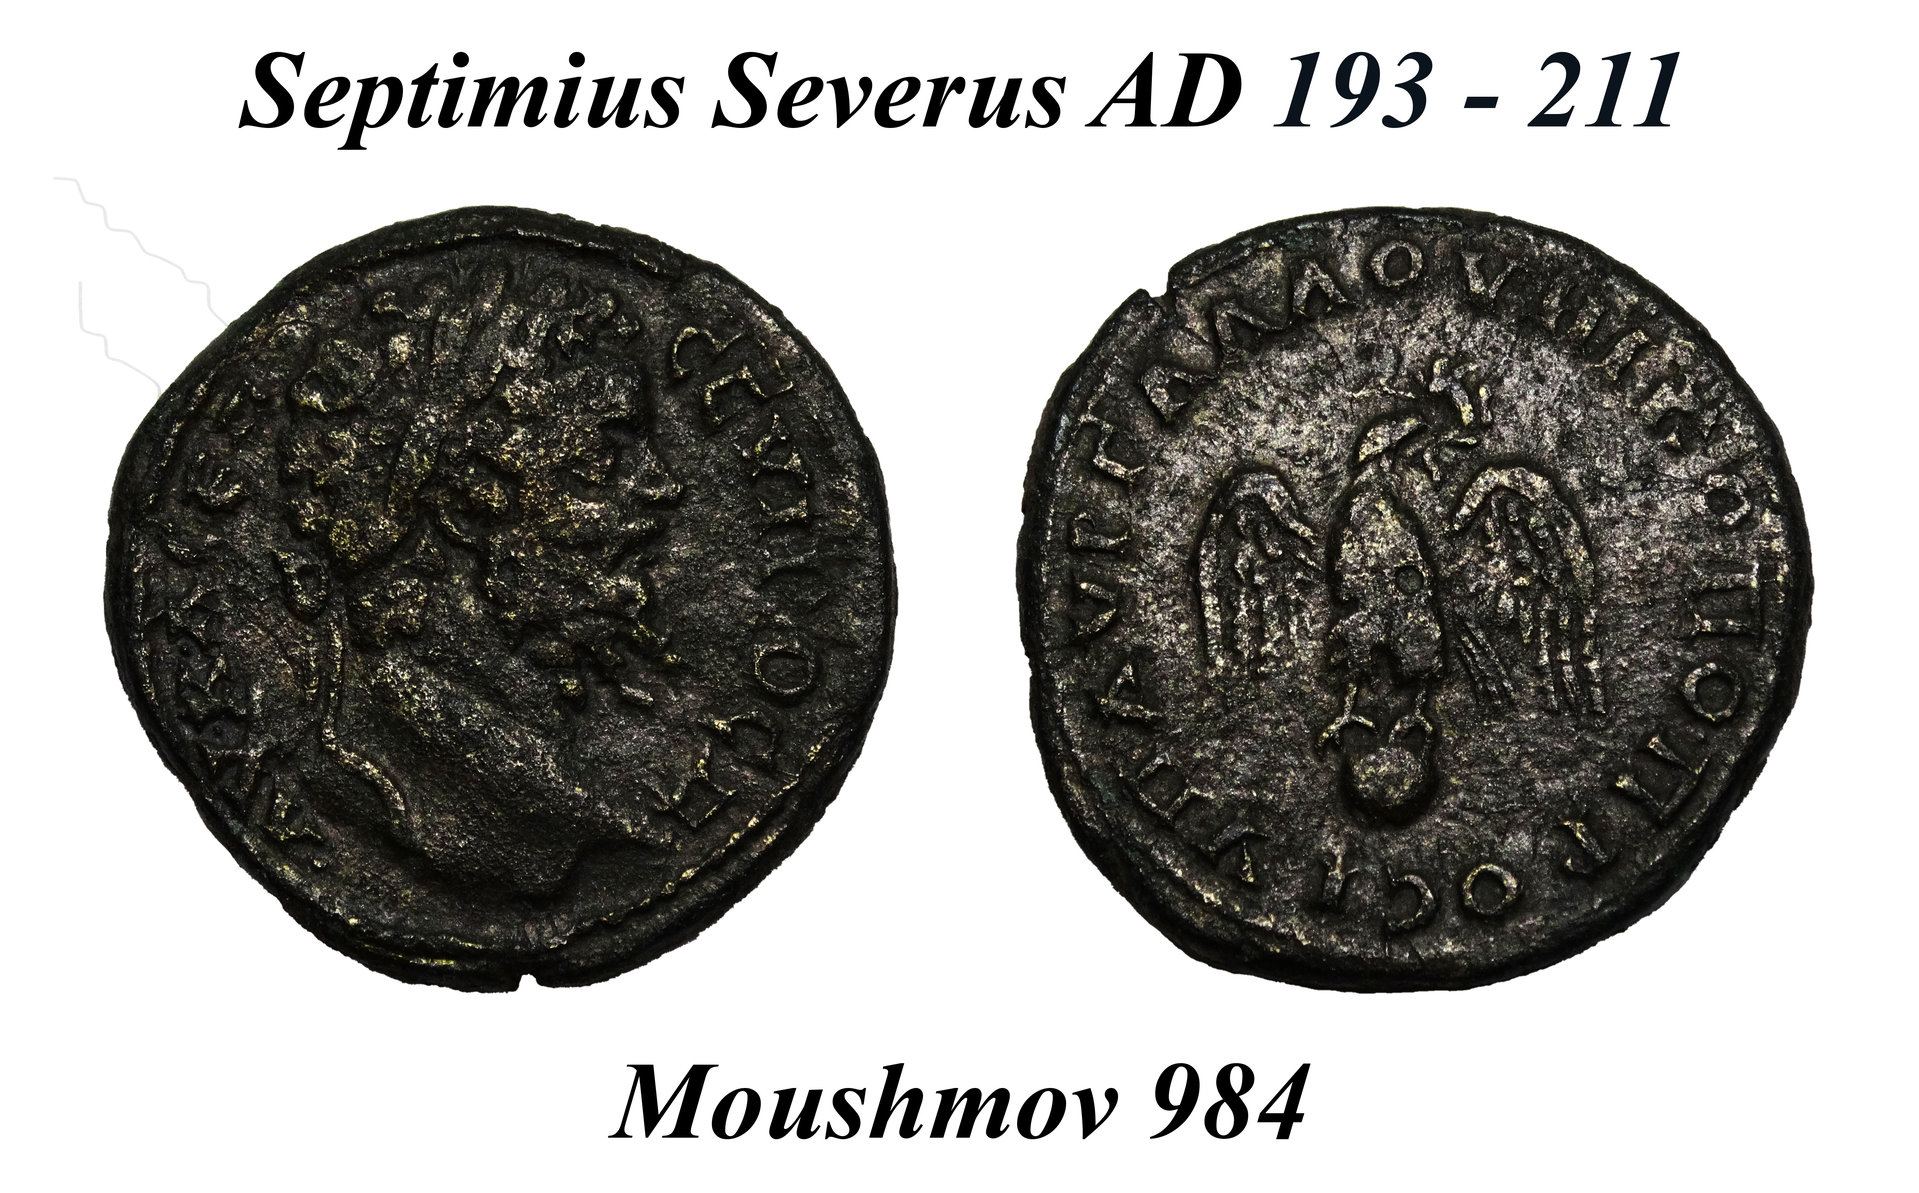 Septimius Severus - Moushmov 984.jpg